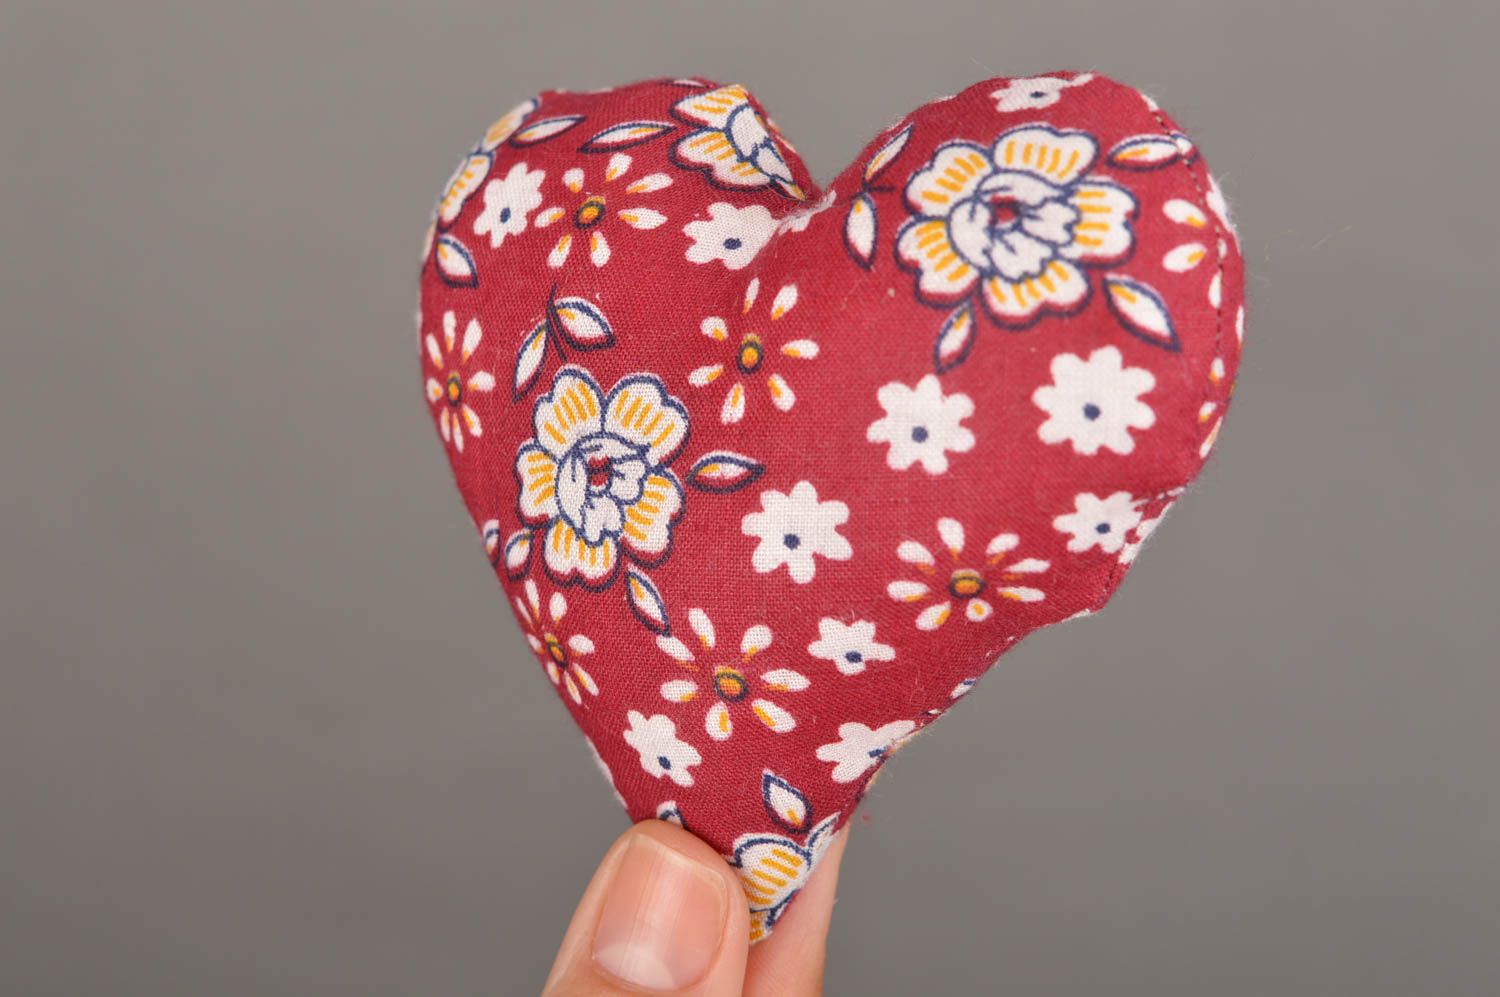 Handmade stuffed toy heart made of cotton beautiful home decor ideas photo 5